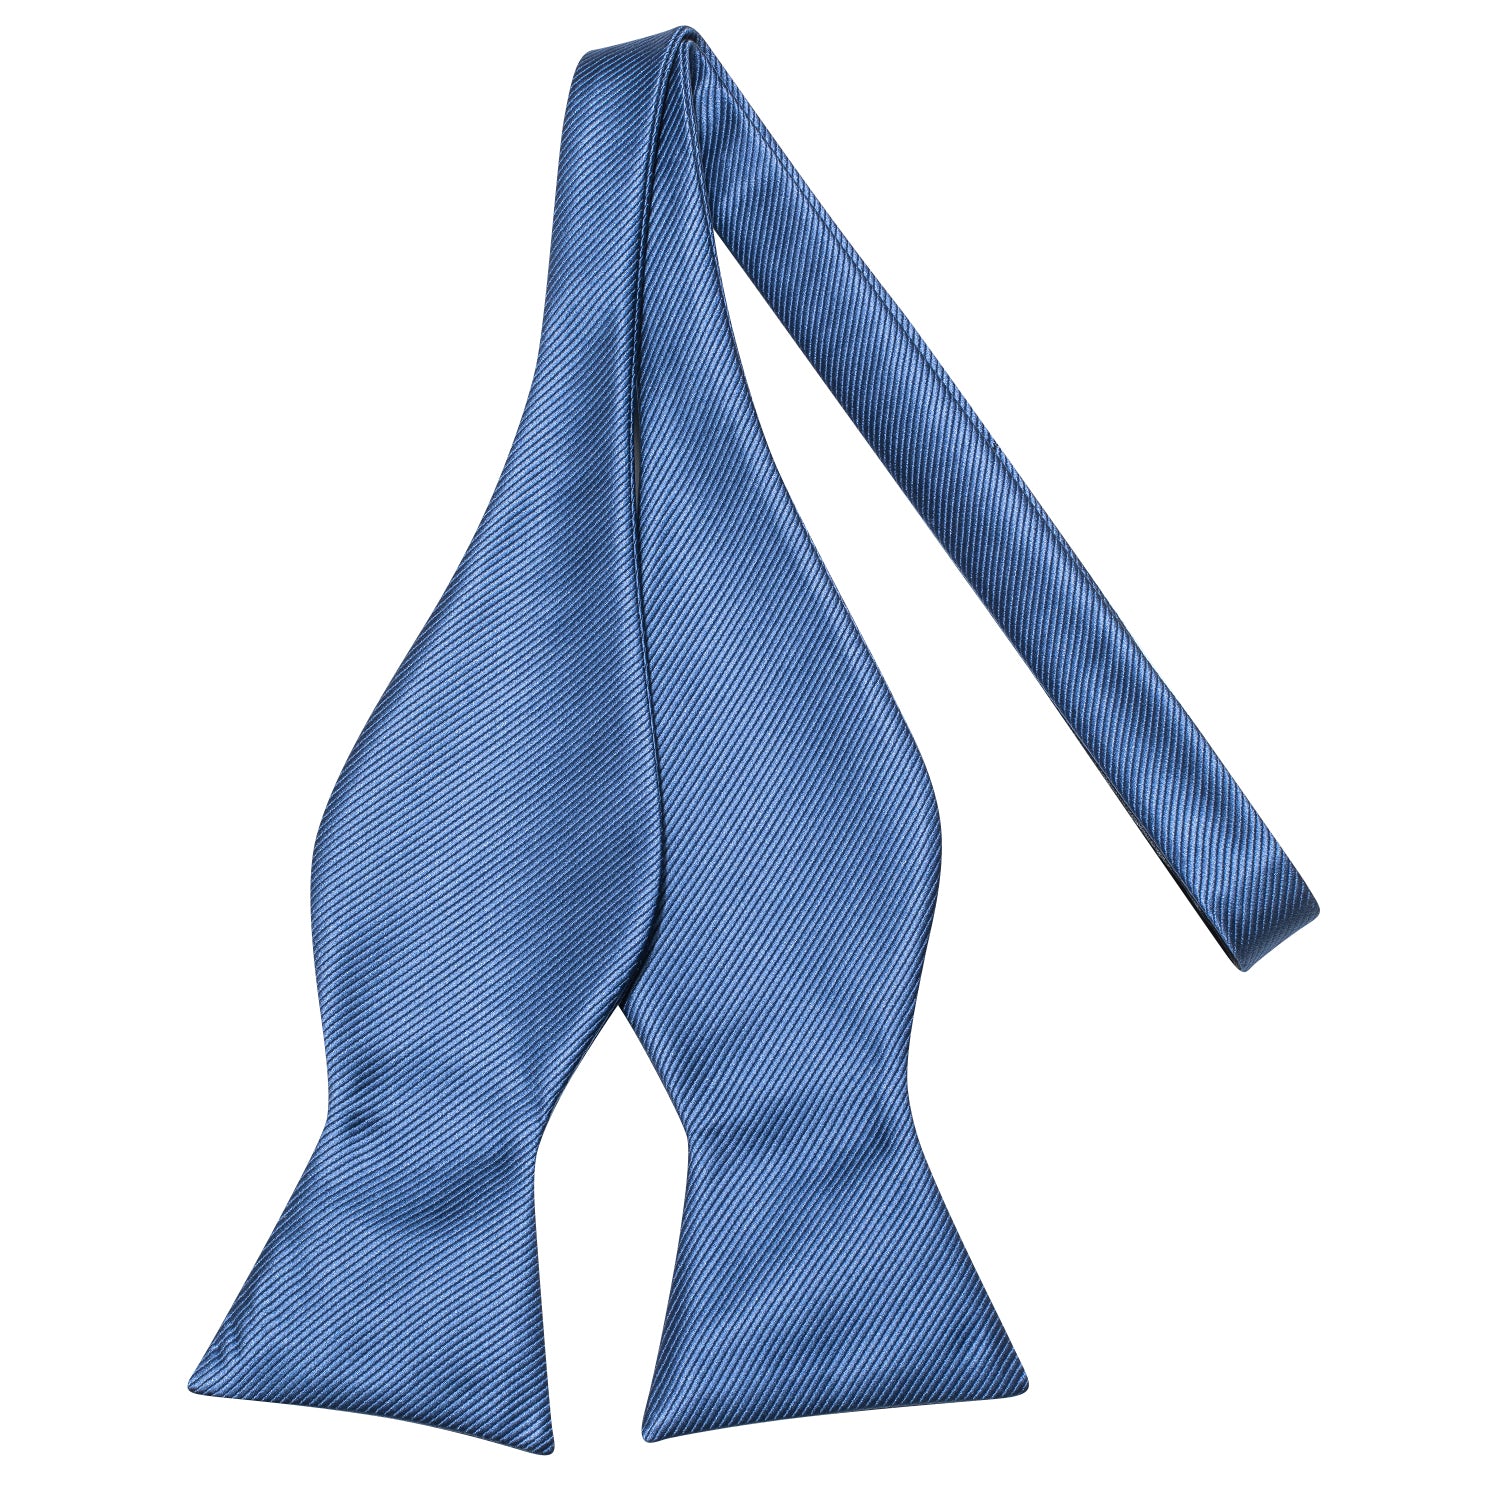 Dark Dusty Blue Striped Silk Self-tied Bow Tie Pocket Square Cufflinks Set